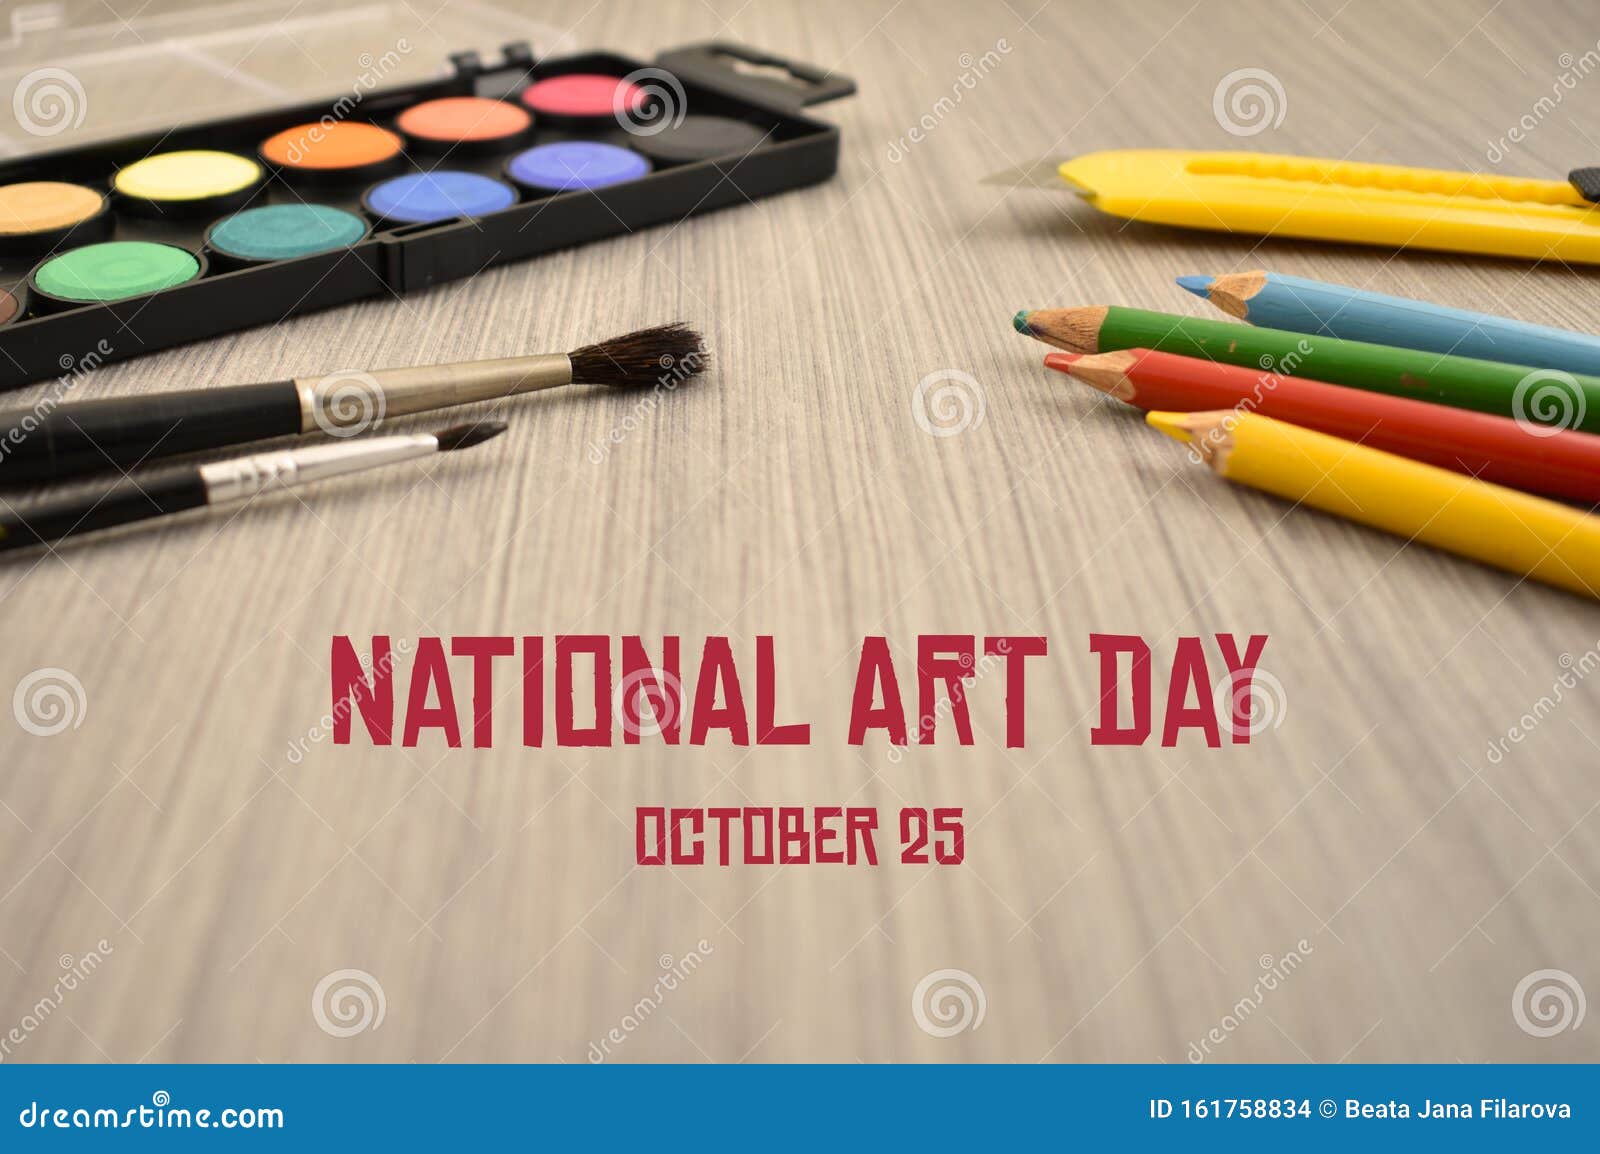 National Art Day images stock photo. Image of creativity 161758834